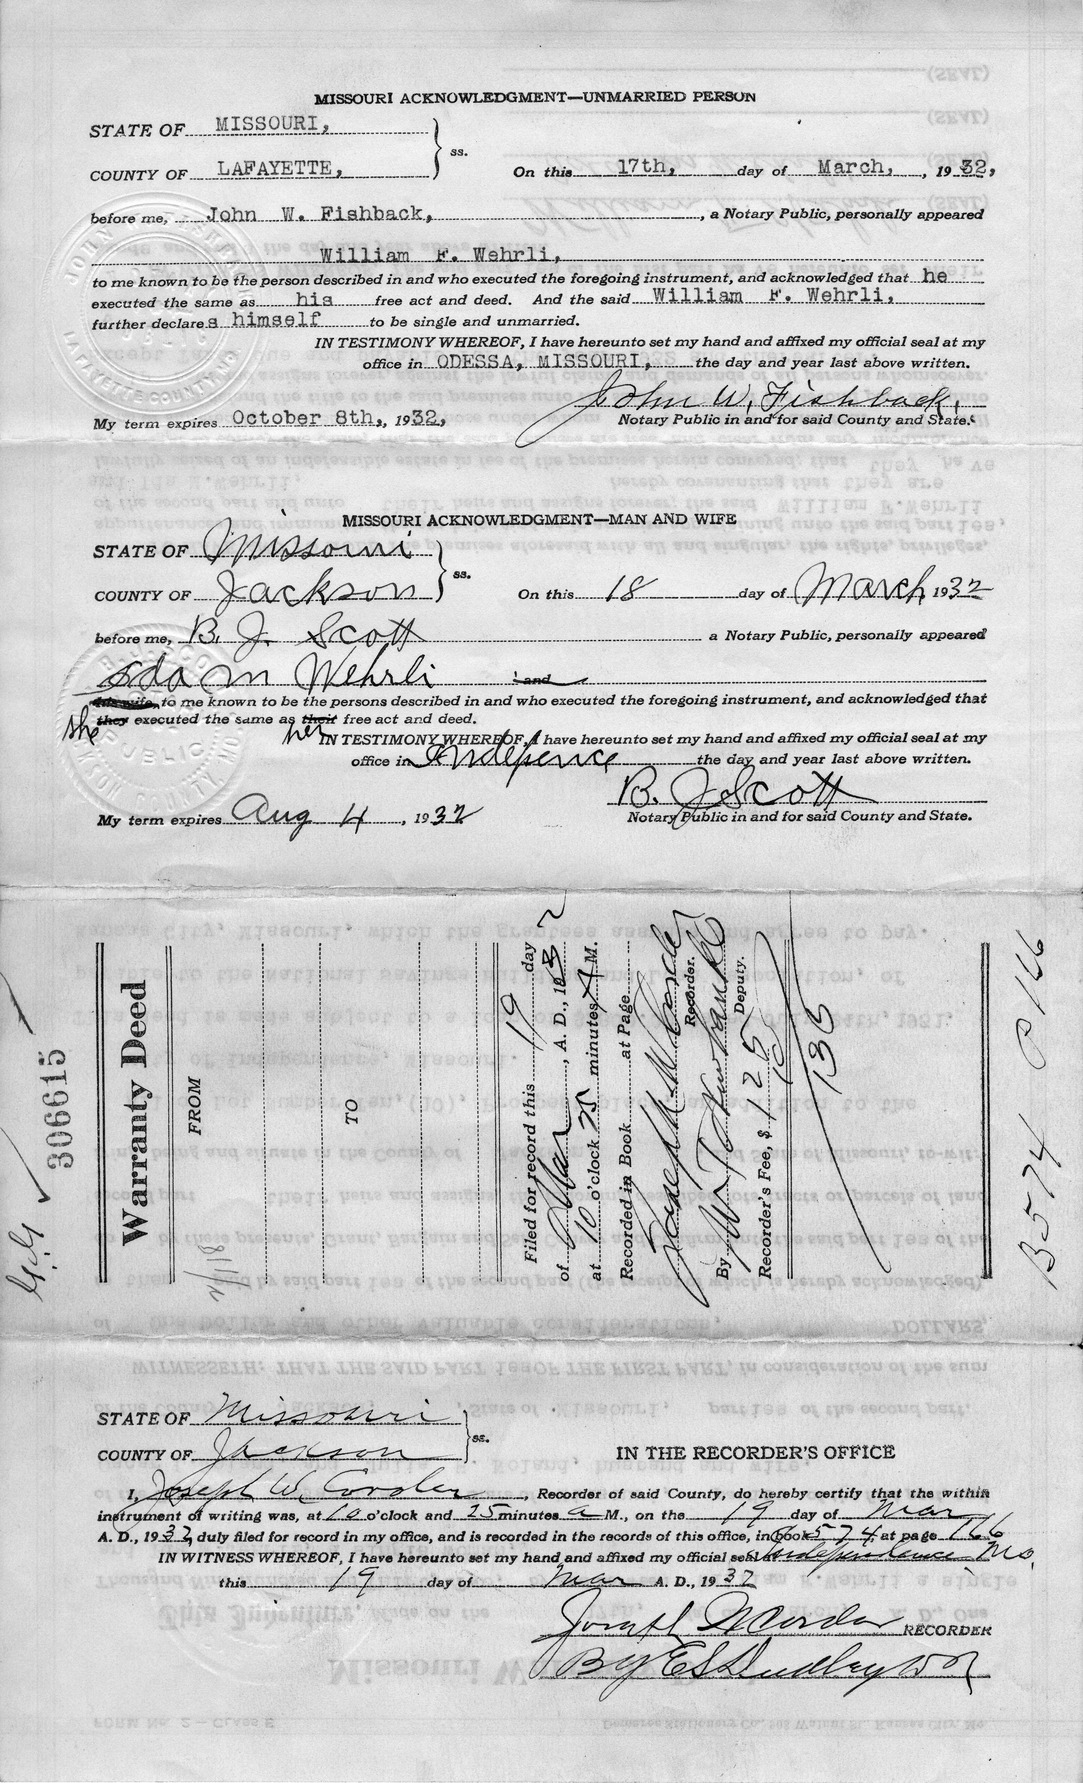 Warranty Deed from William F. Wehrli and Ida M. Wehrli to Oscar L. Noland and Julia H. Noland